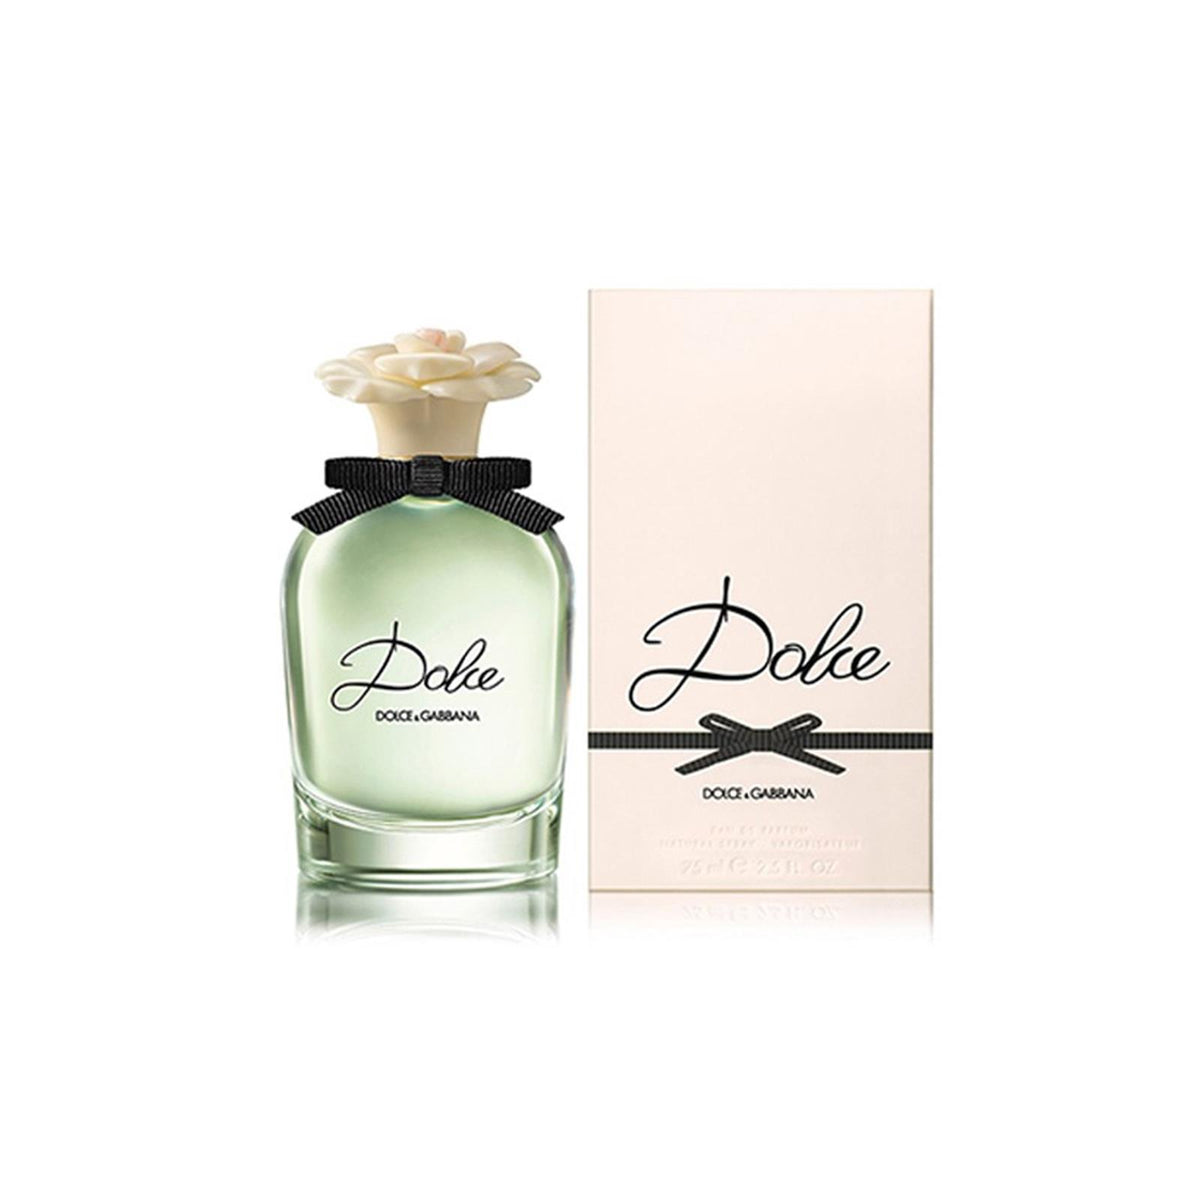 Dolce by Dolce & Gabbana – Parfum MM